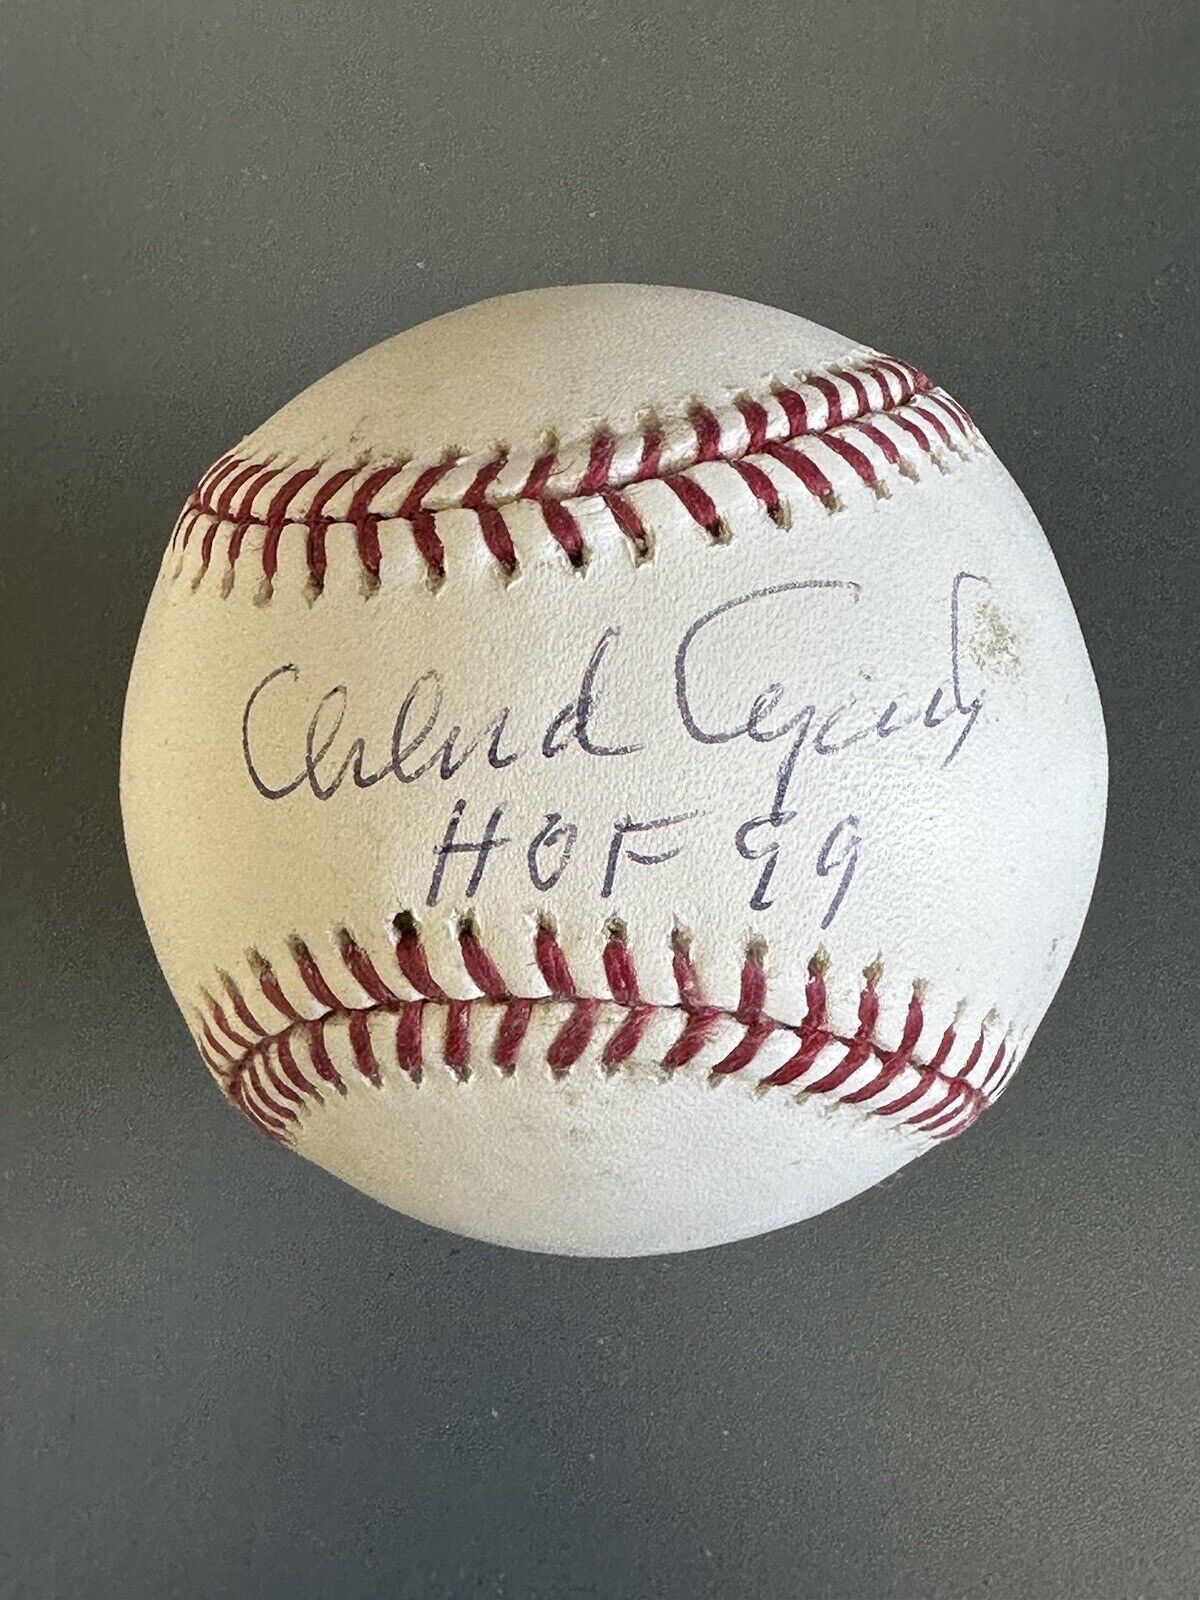 Orlando Cepeda HOF 99 Giants Cardinals SIGNED Official MLB Baseball w/ hologram